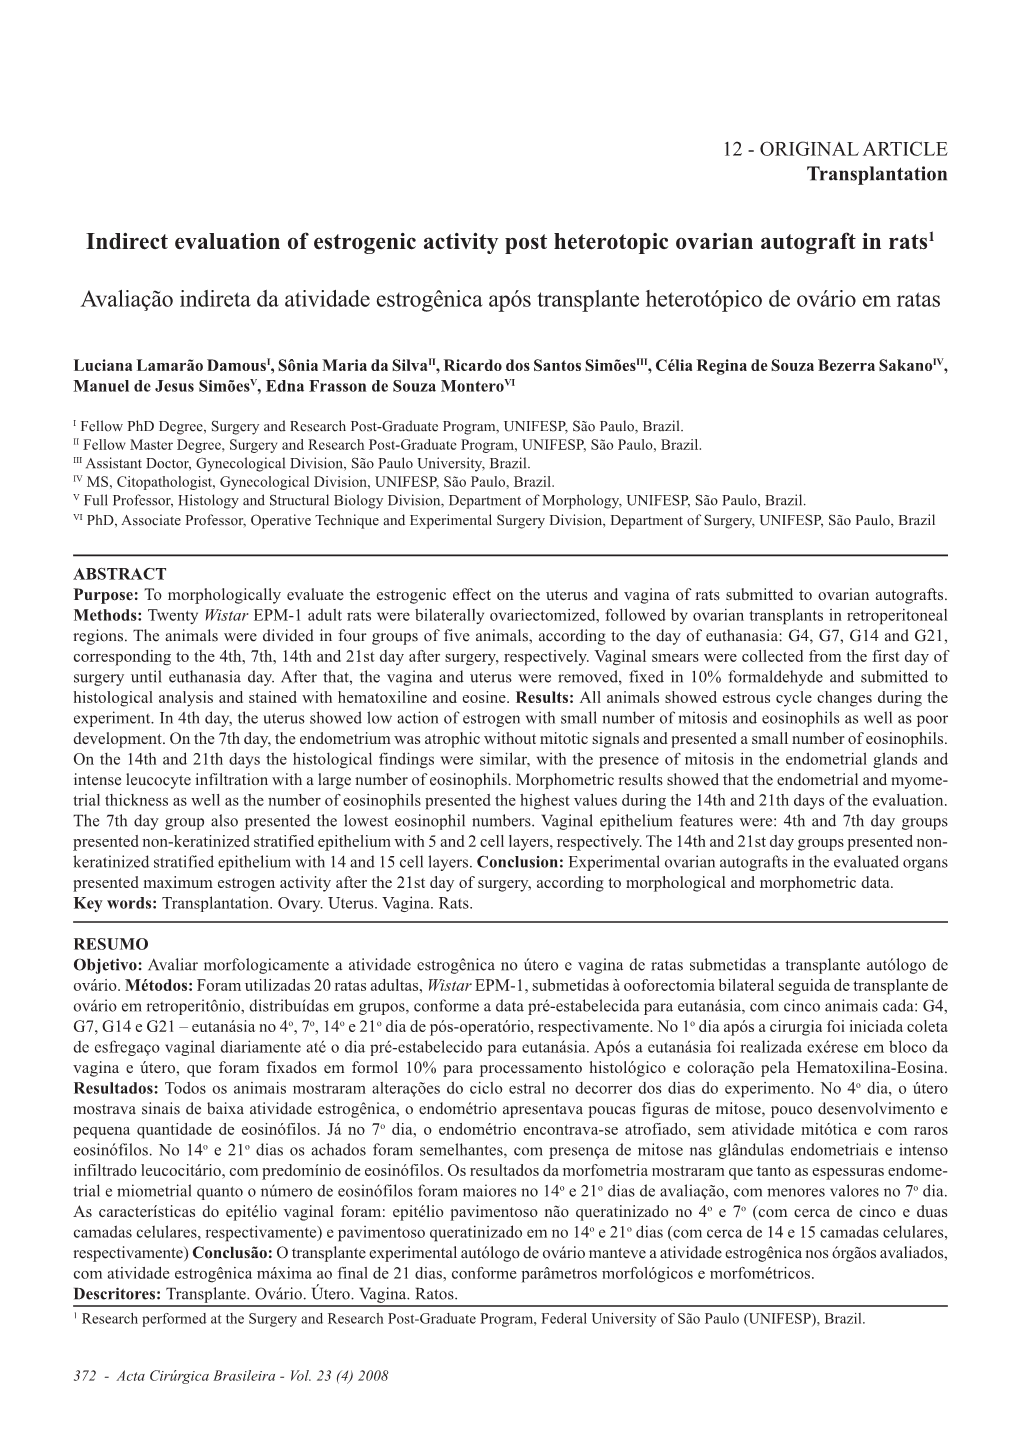 Indirect Evaluation of Estrogenic Activity Post Heterotopic Ovarian Autograft in Rats1